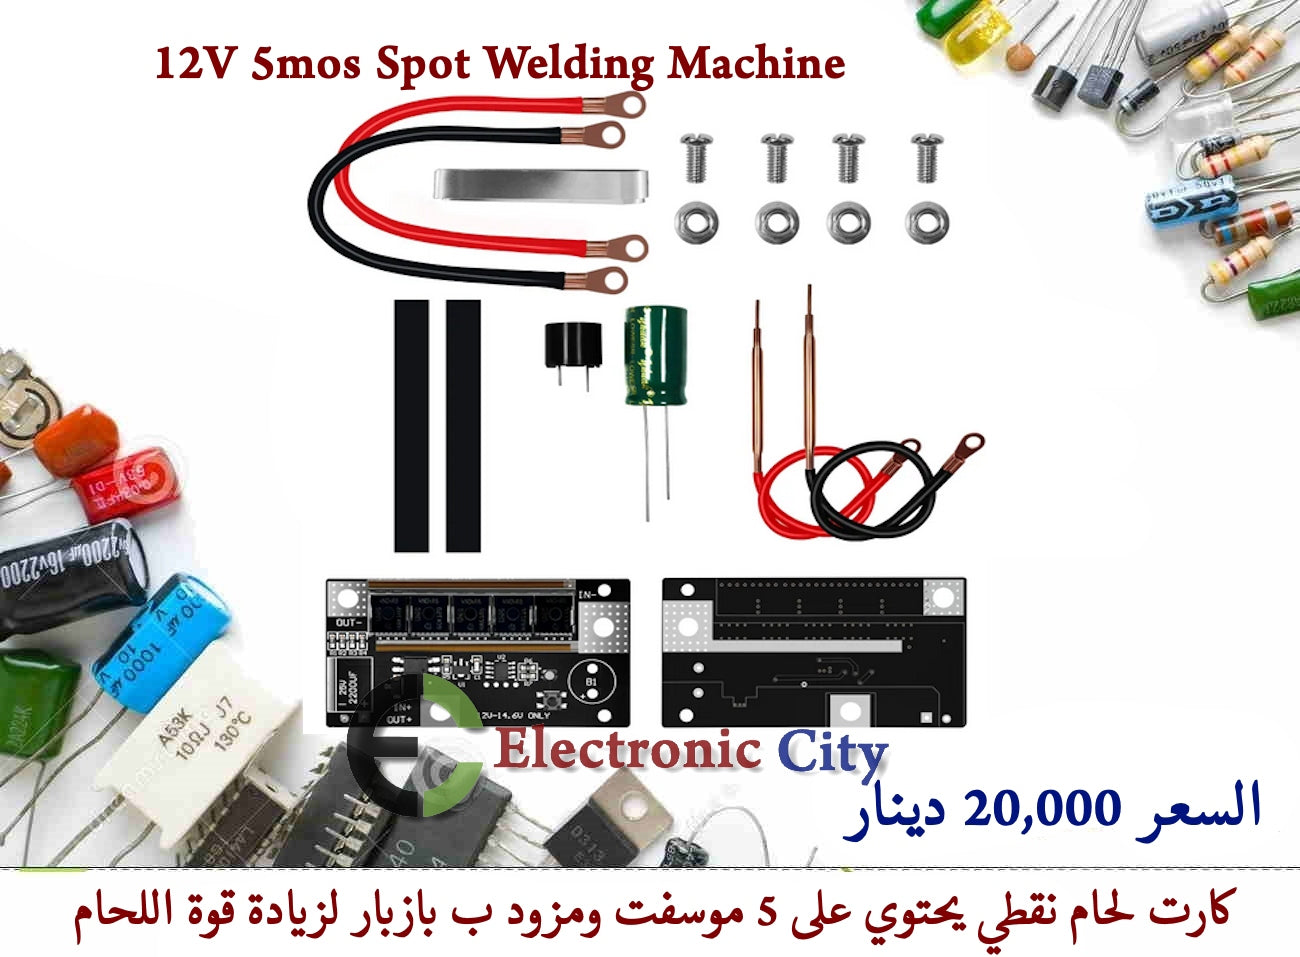 12V 5mos Spot Welding Machine 12254